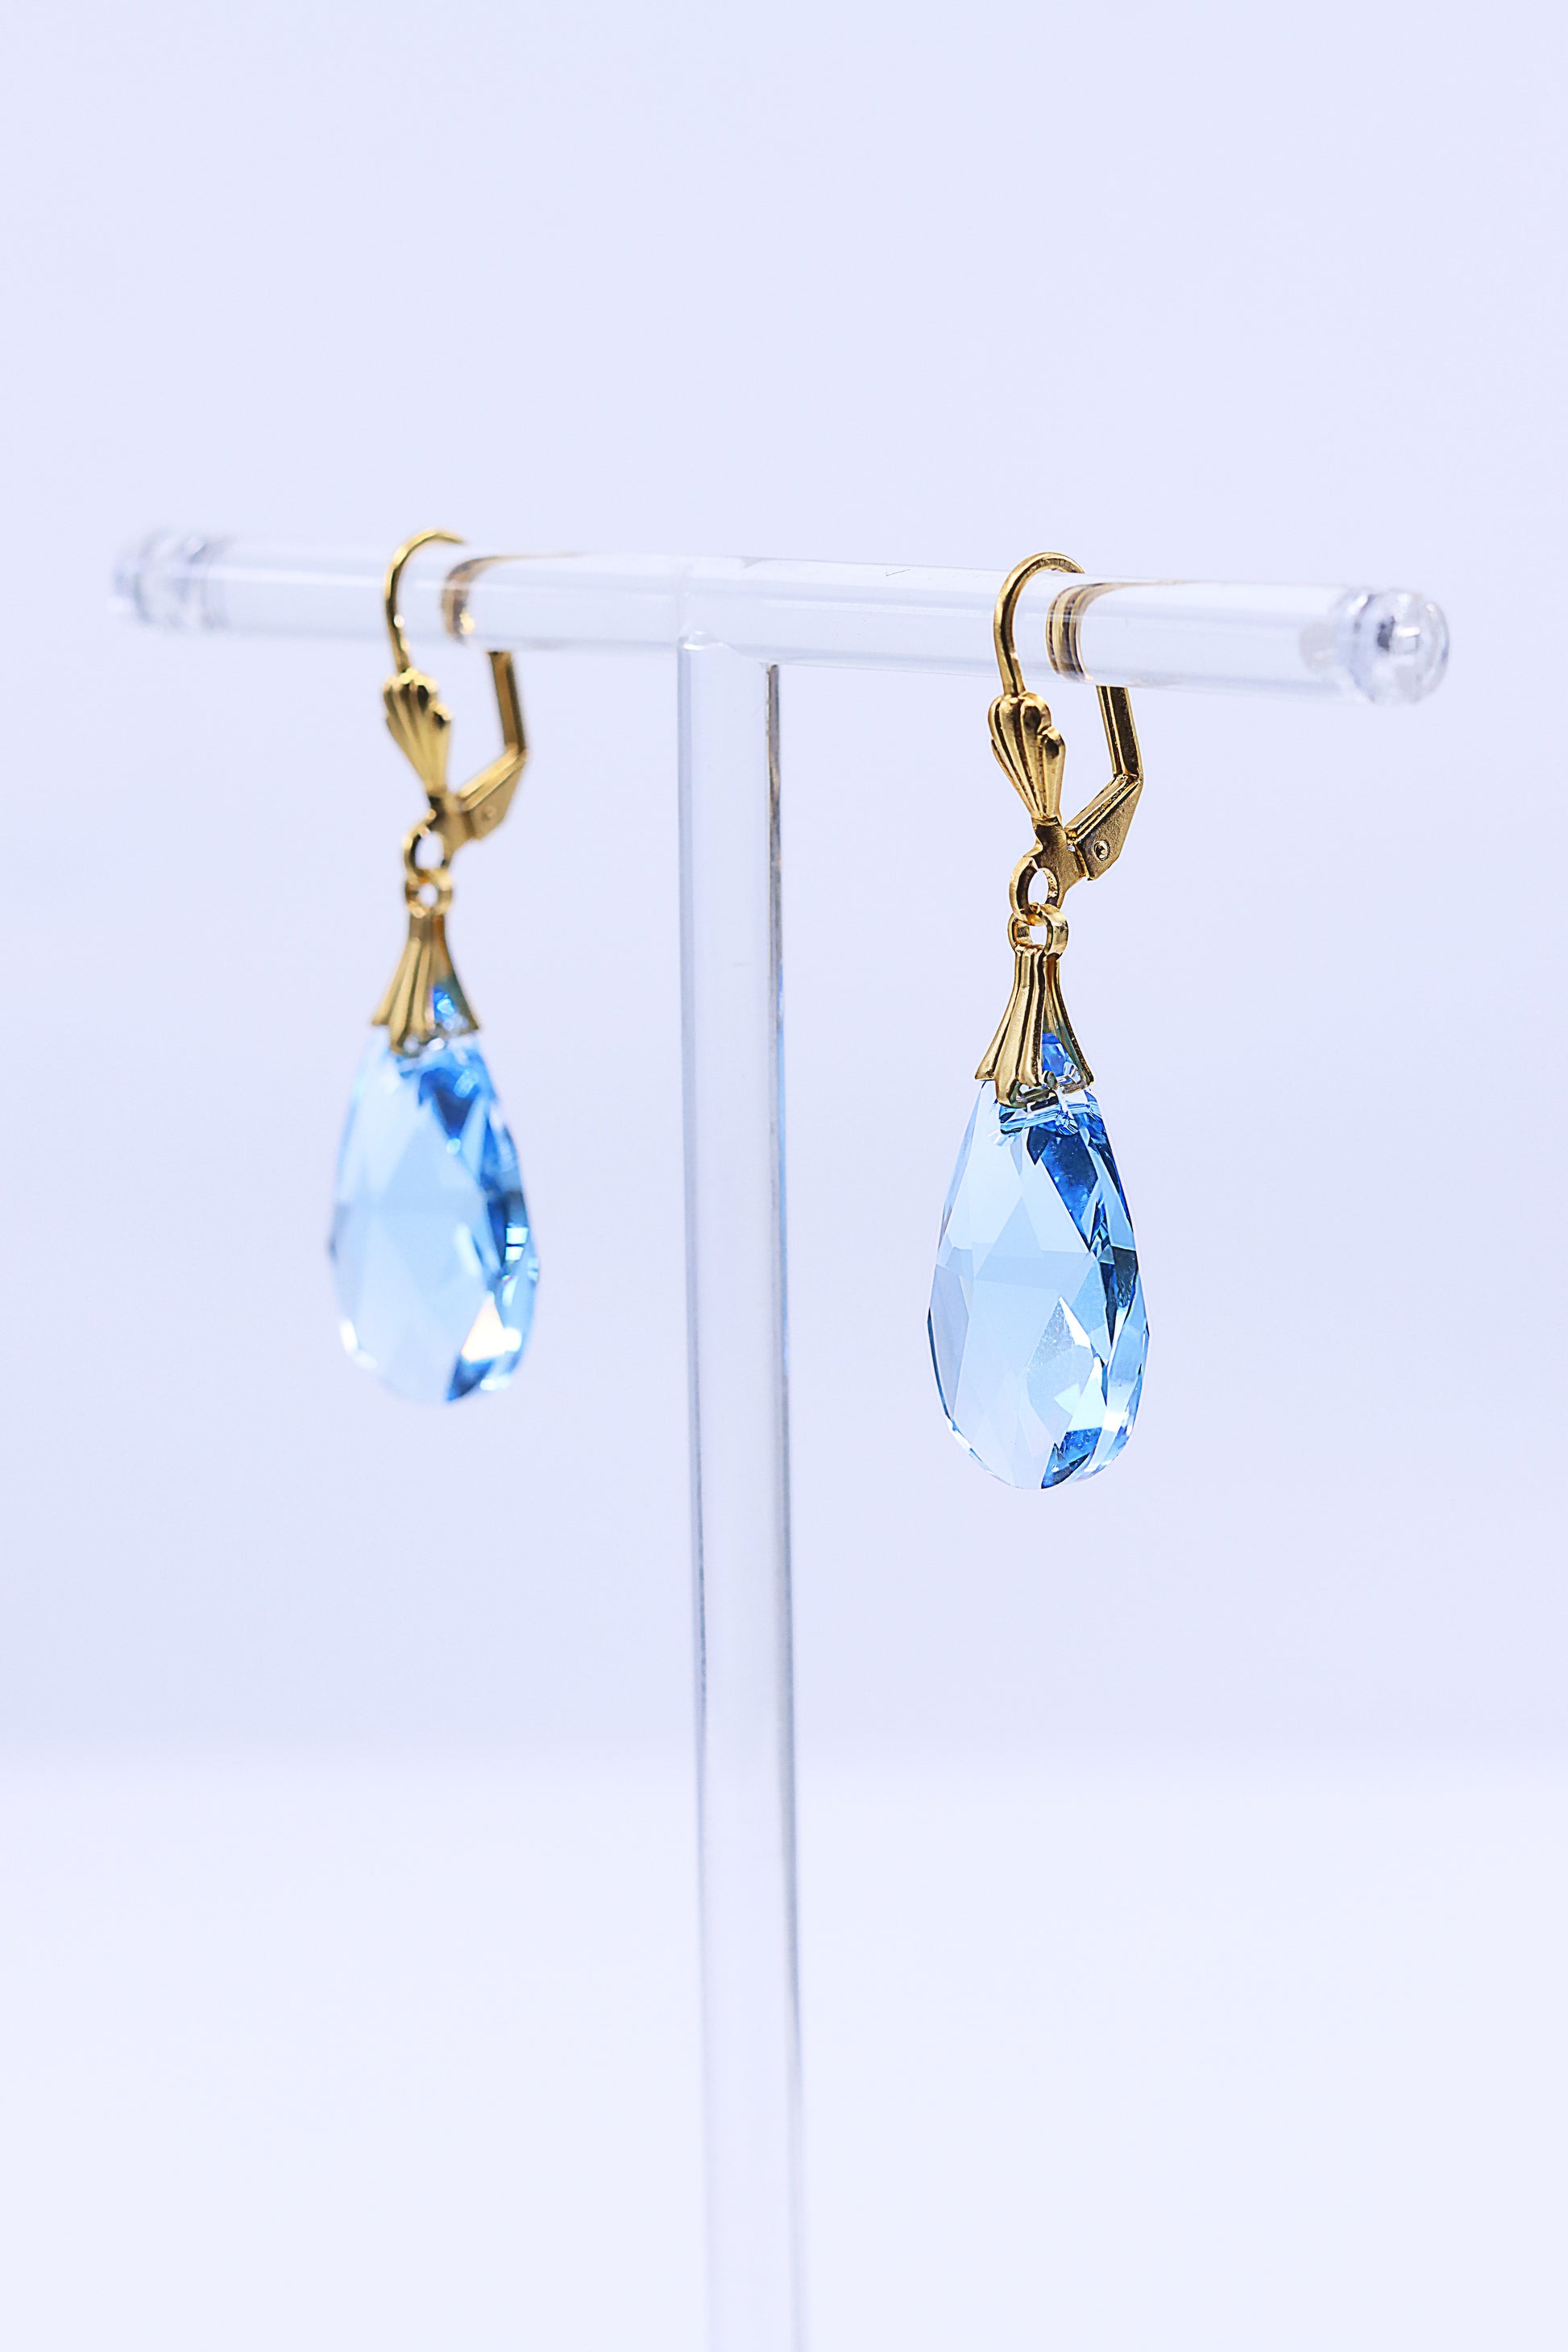 Sicily Gold Earrings - Alzerina Jewelry